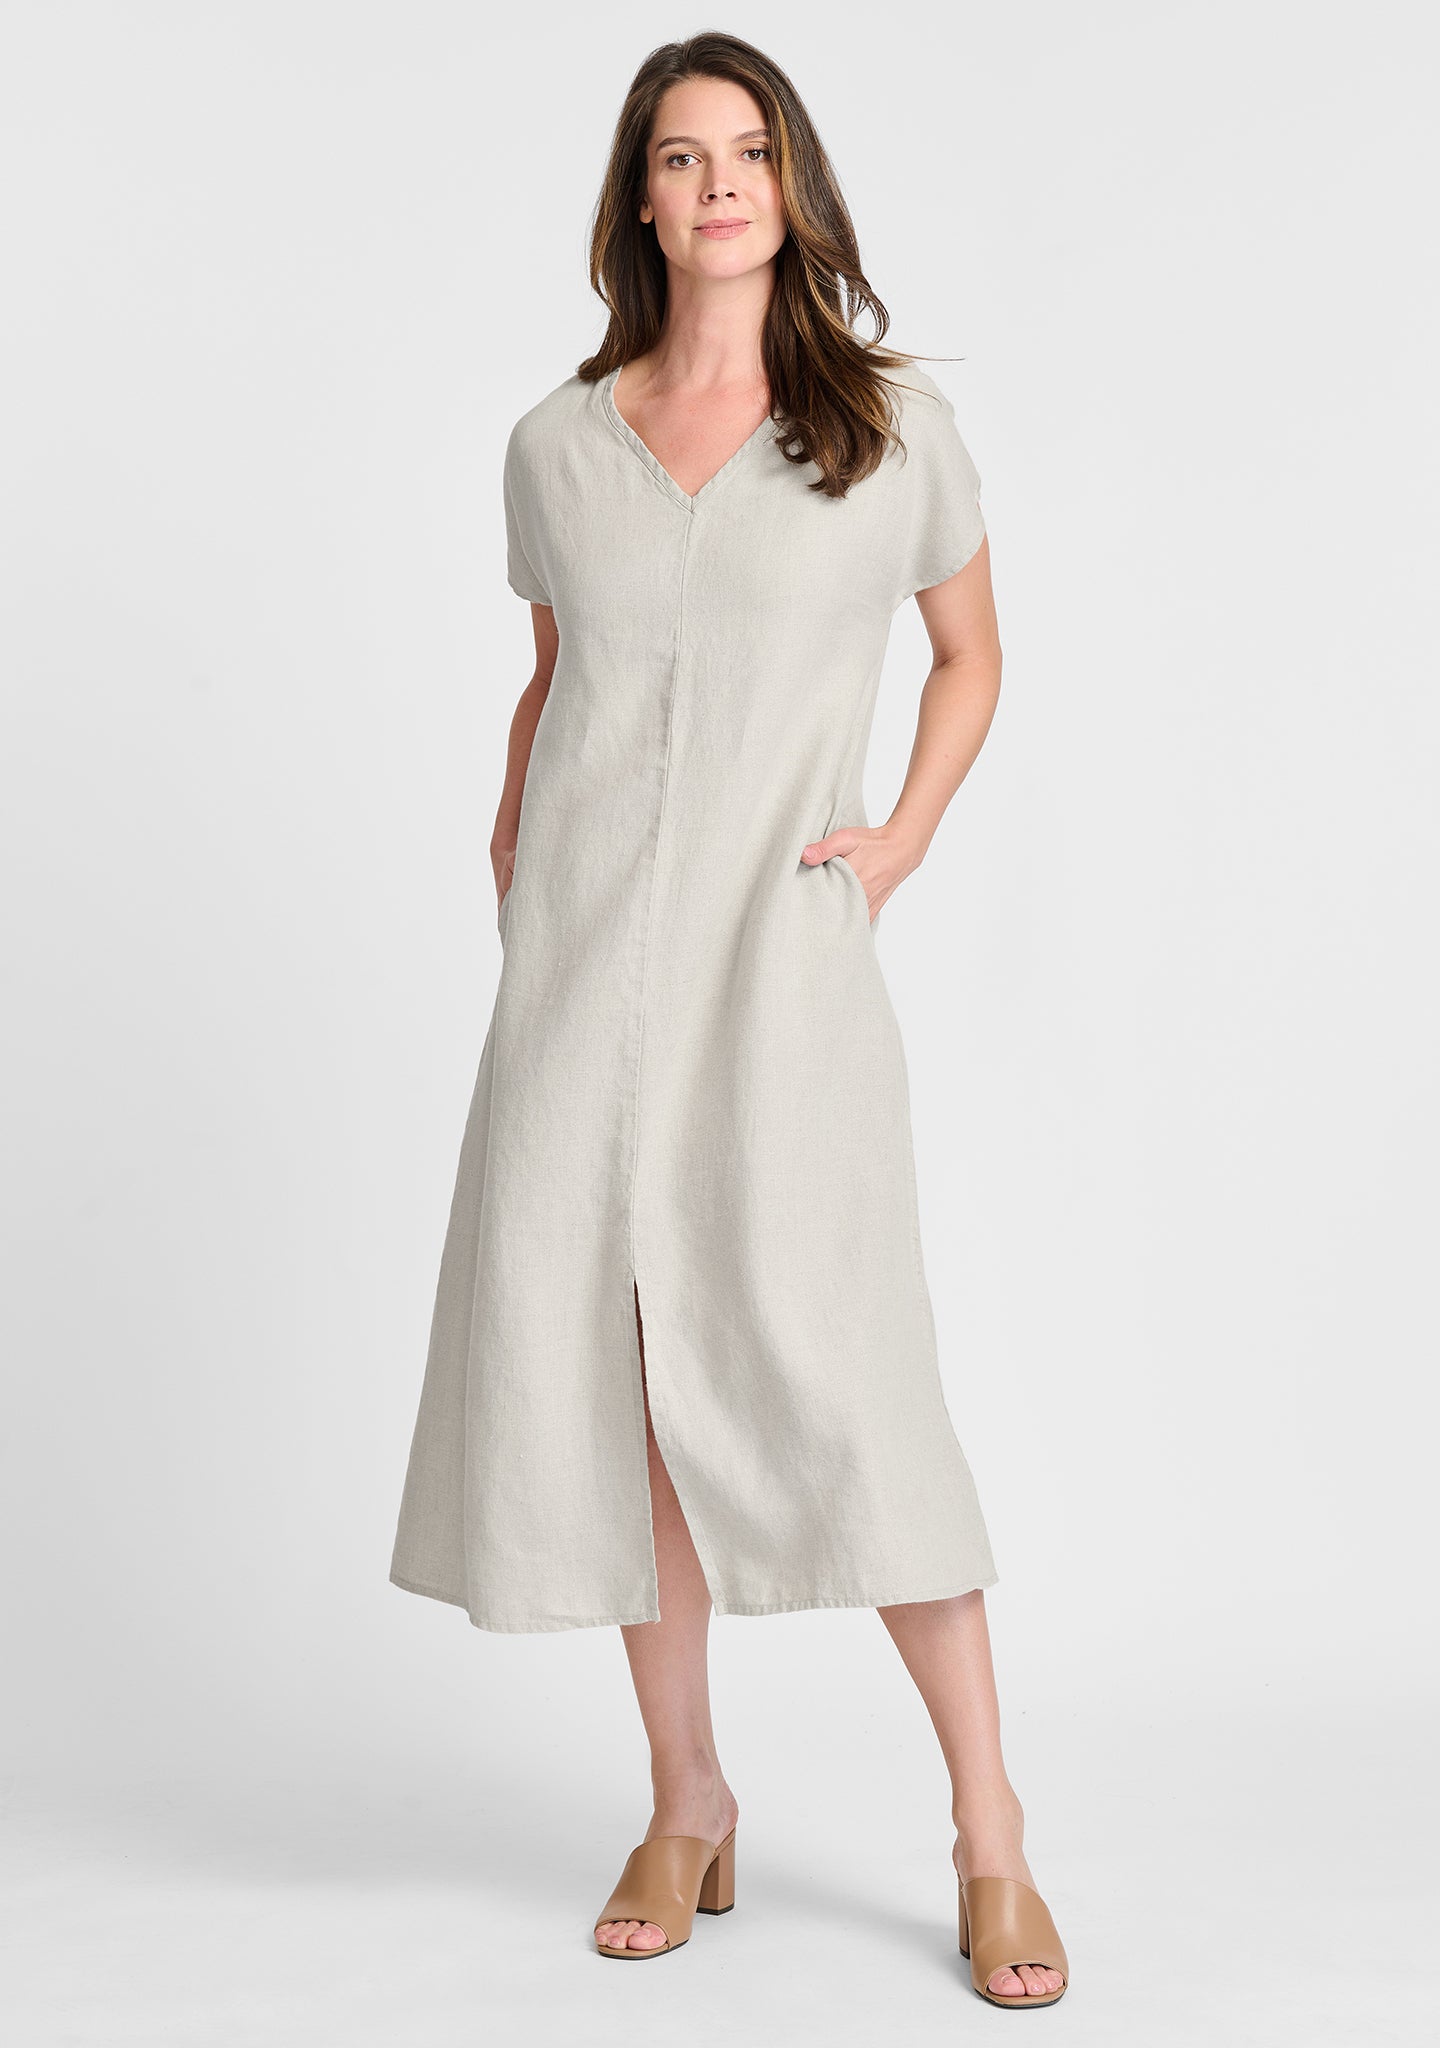 FLAX linen dress in natural